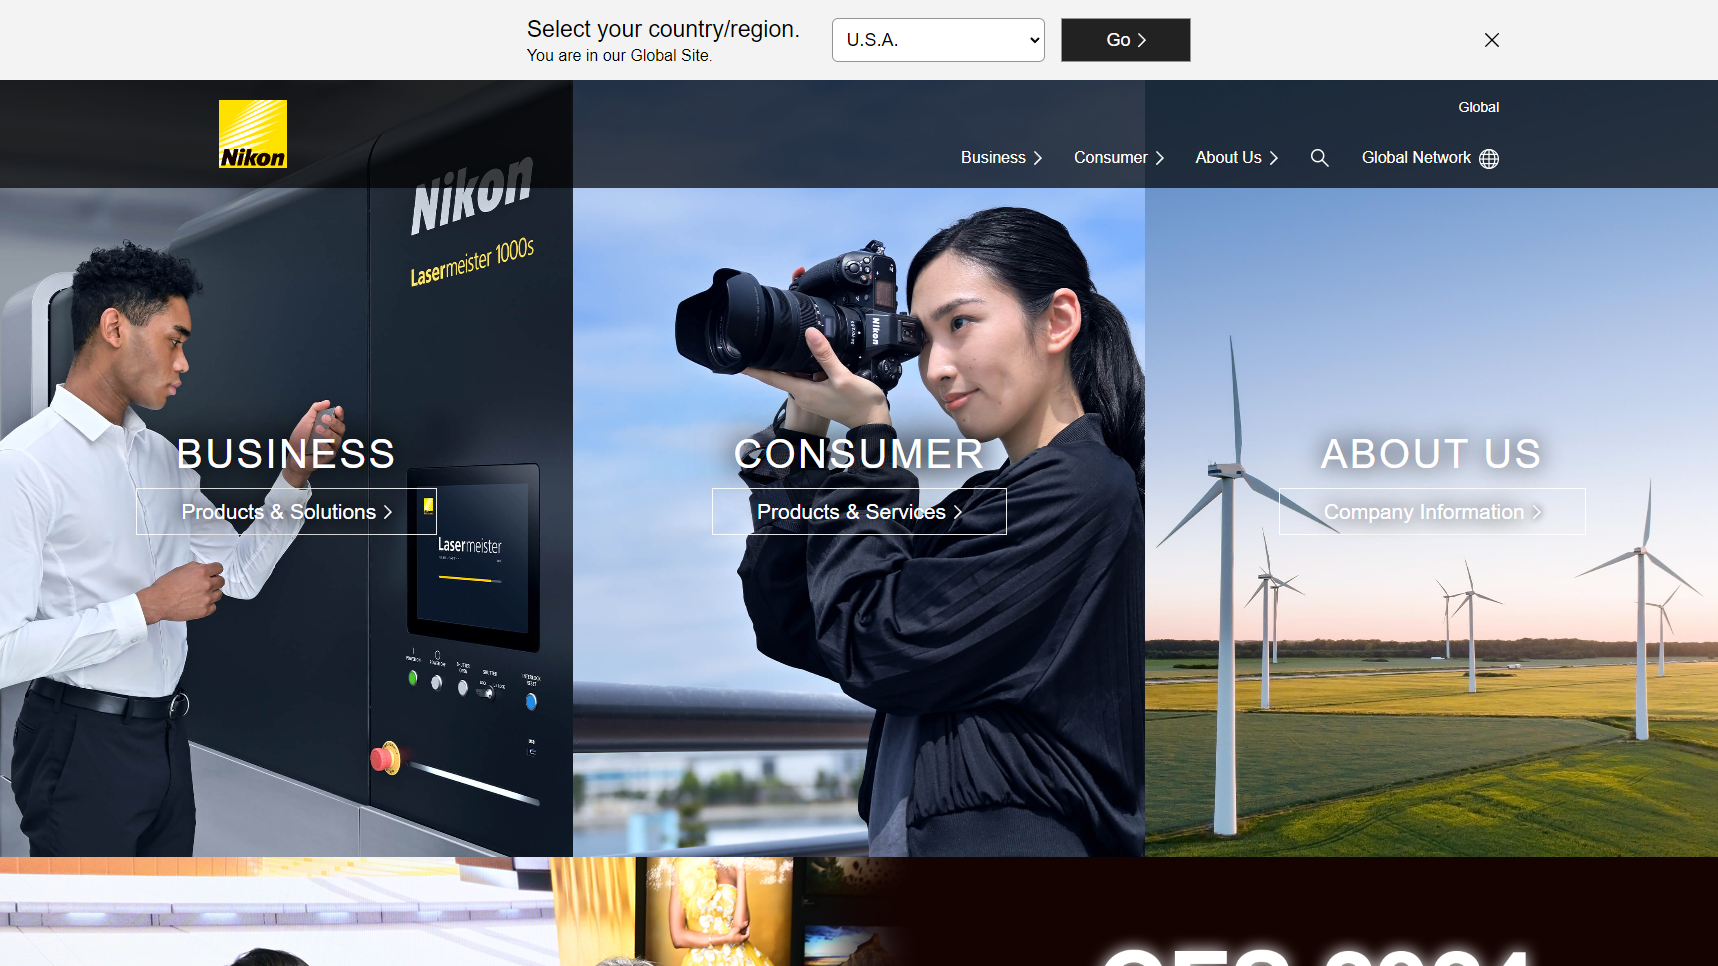 Nikon - Digital Camera Manufacturer